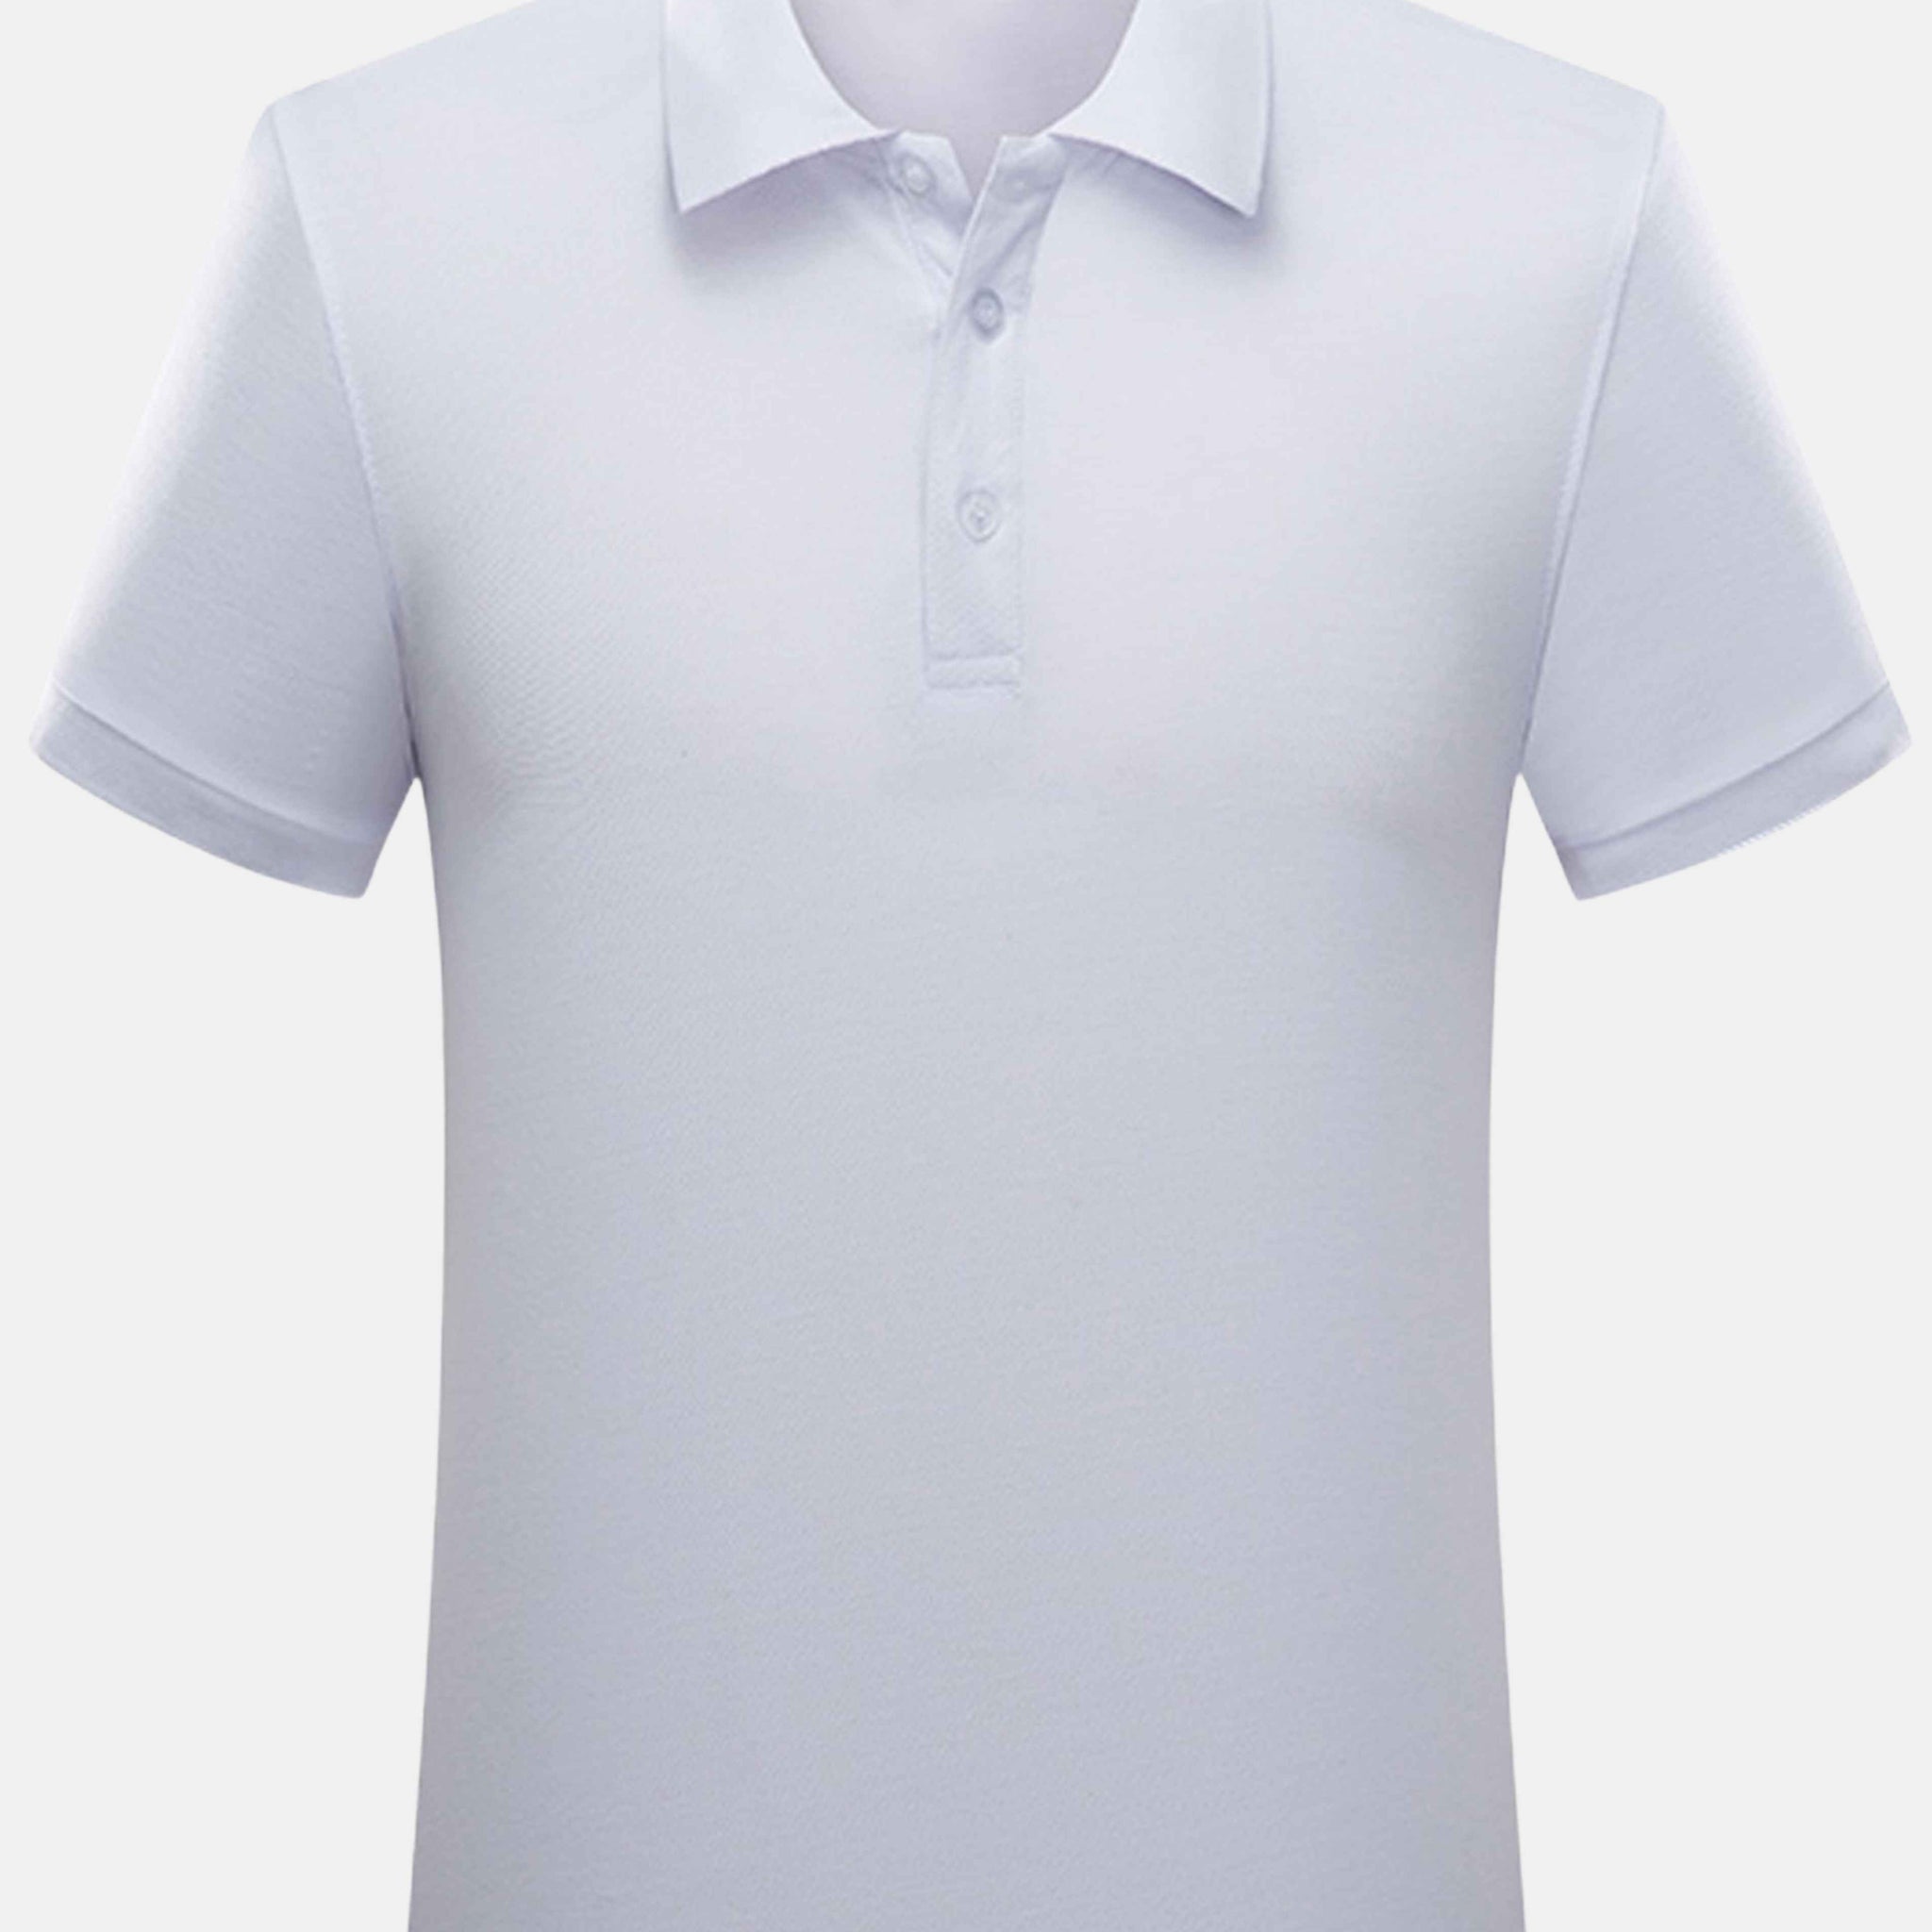 Basic solid color polo shirt